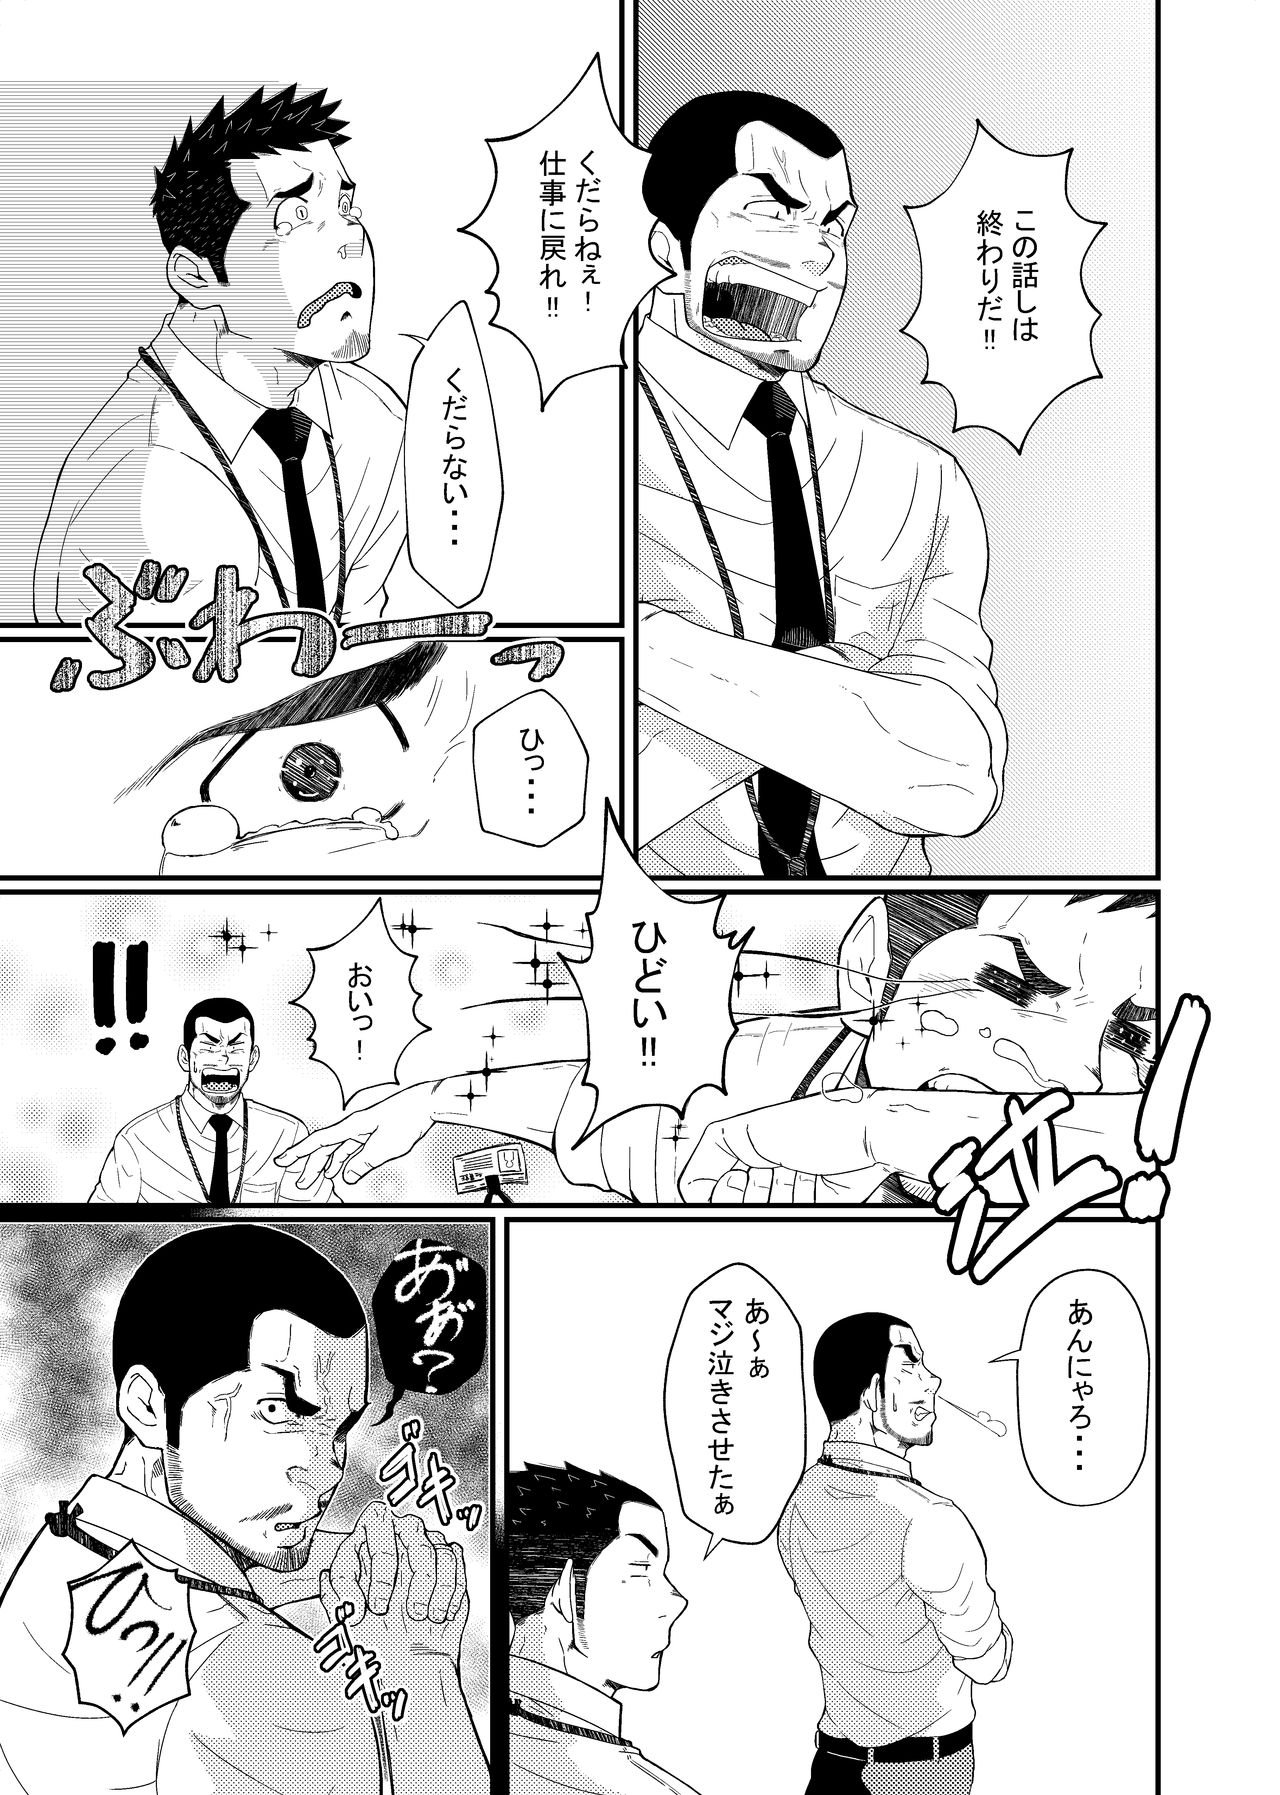 Hirohashi-san to Yamada-San 1 - Mr. Hirohashi & Mr. Yamada 1